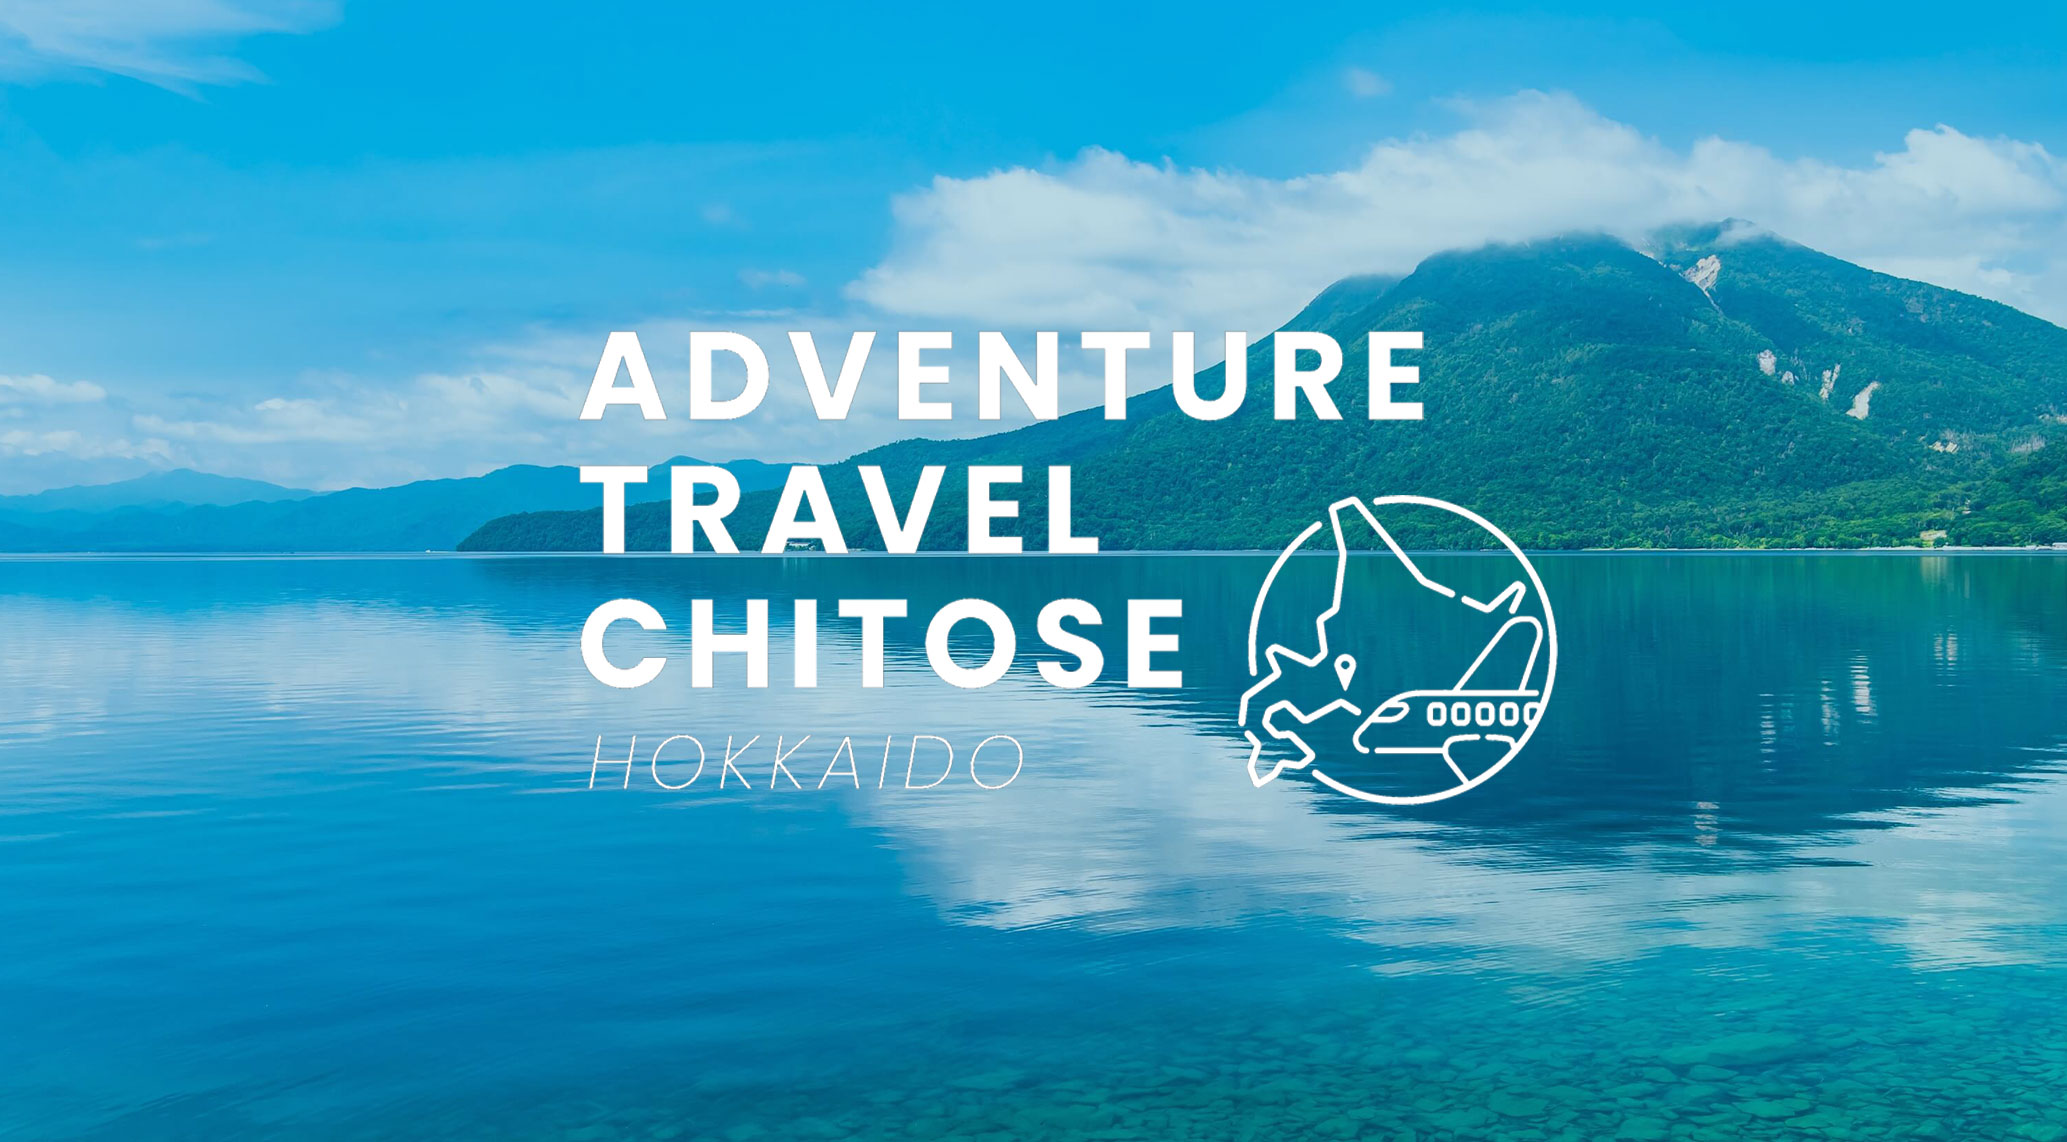 Adventure Travel CHITOSE